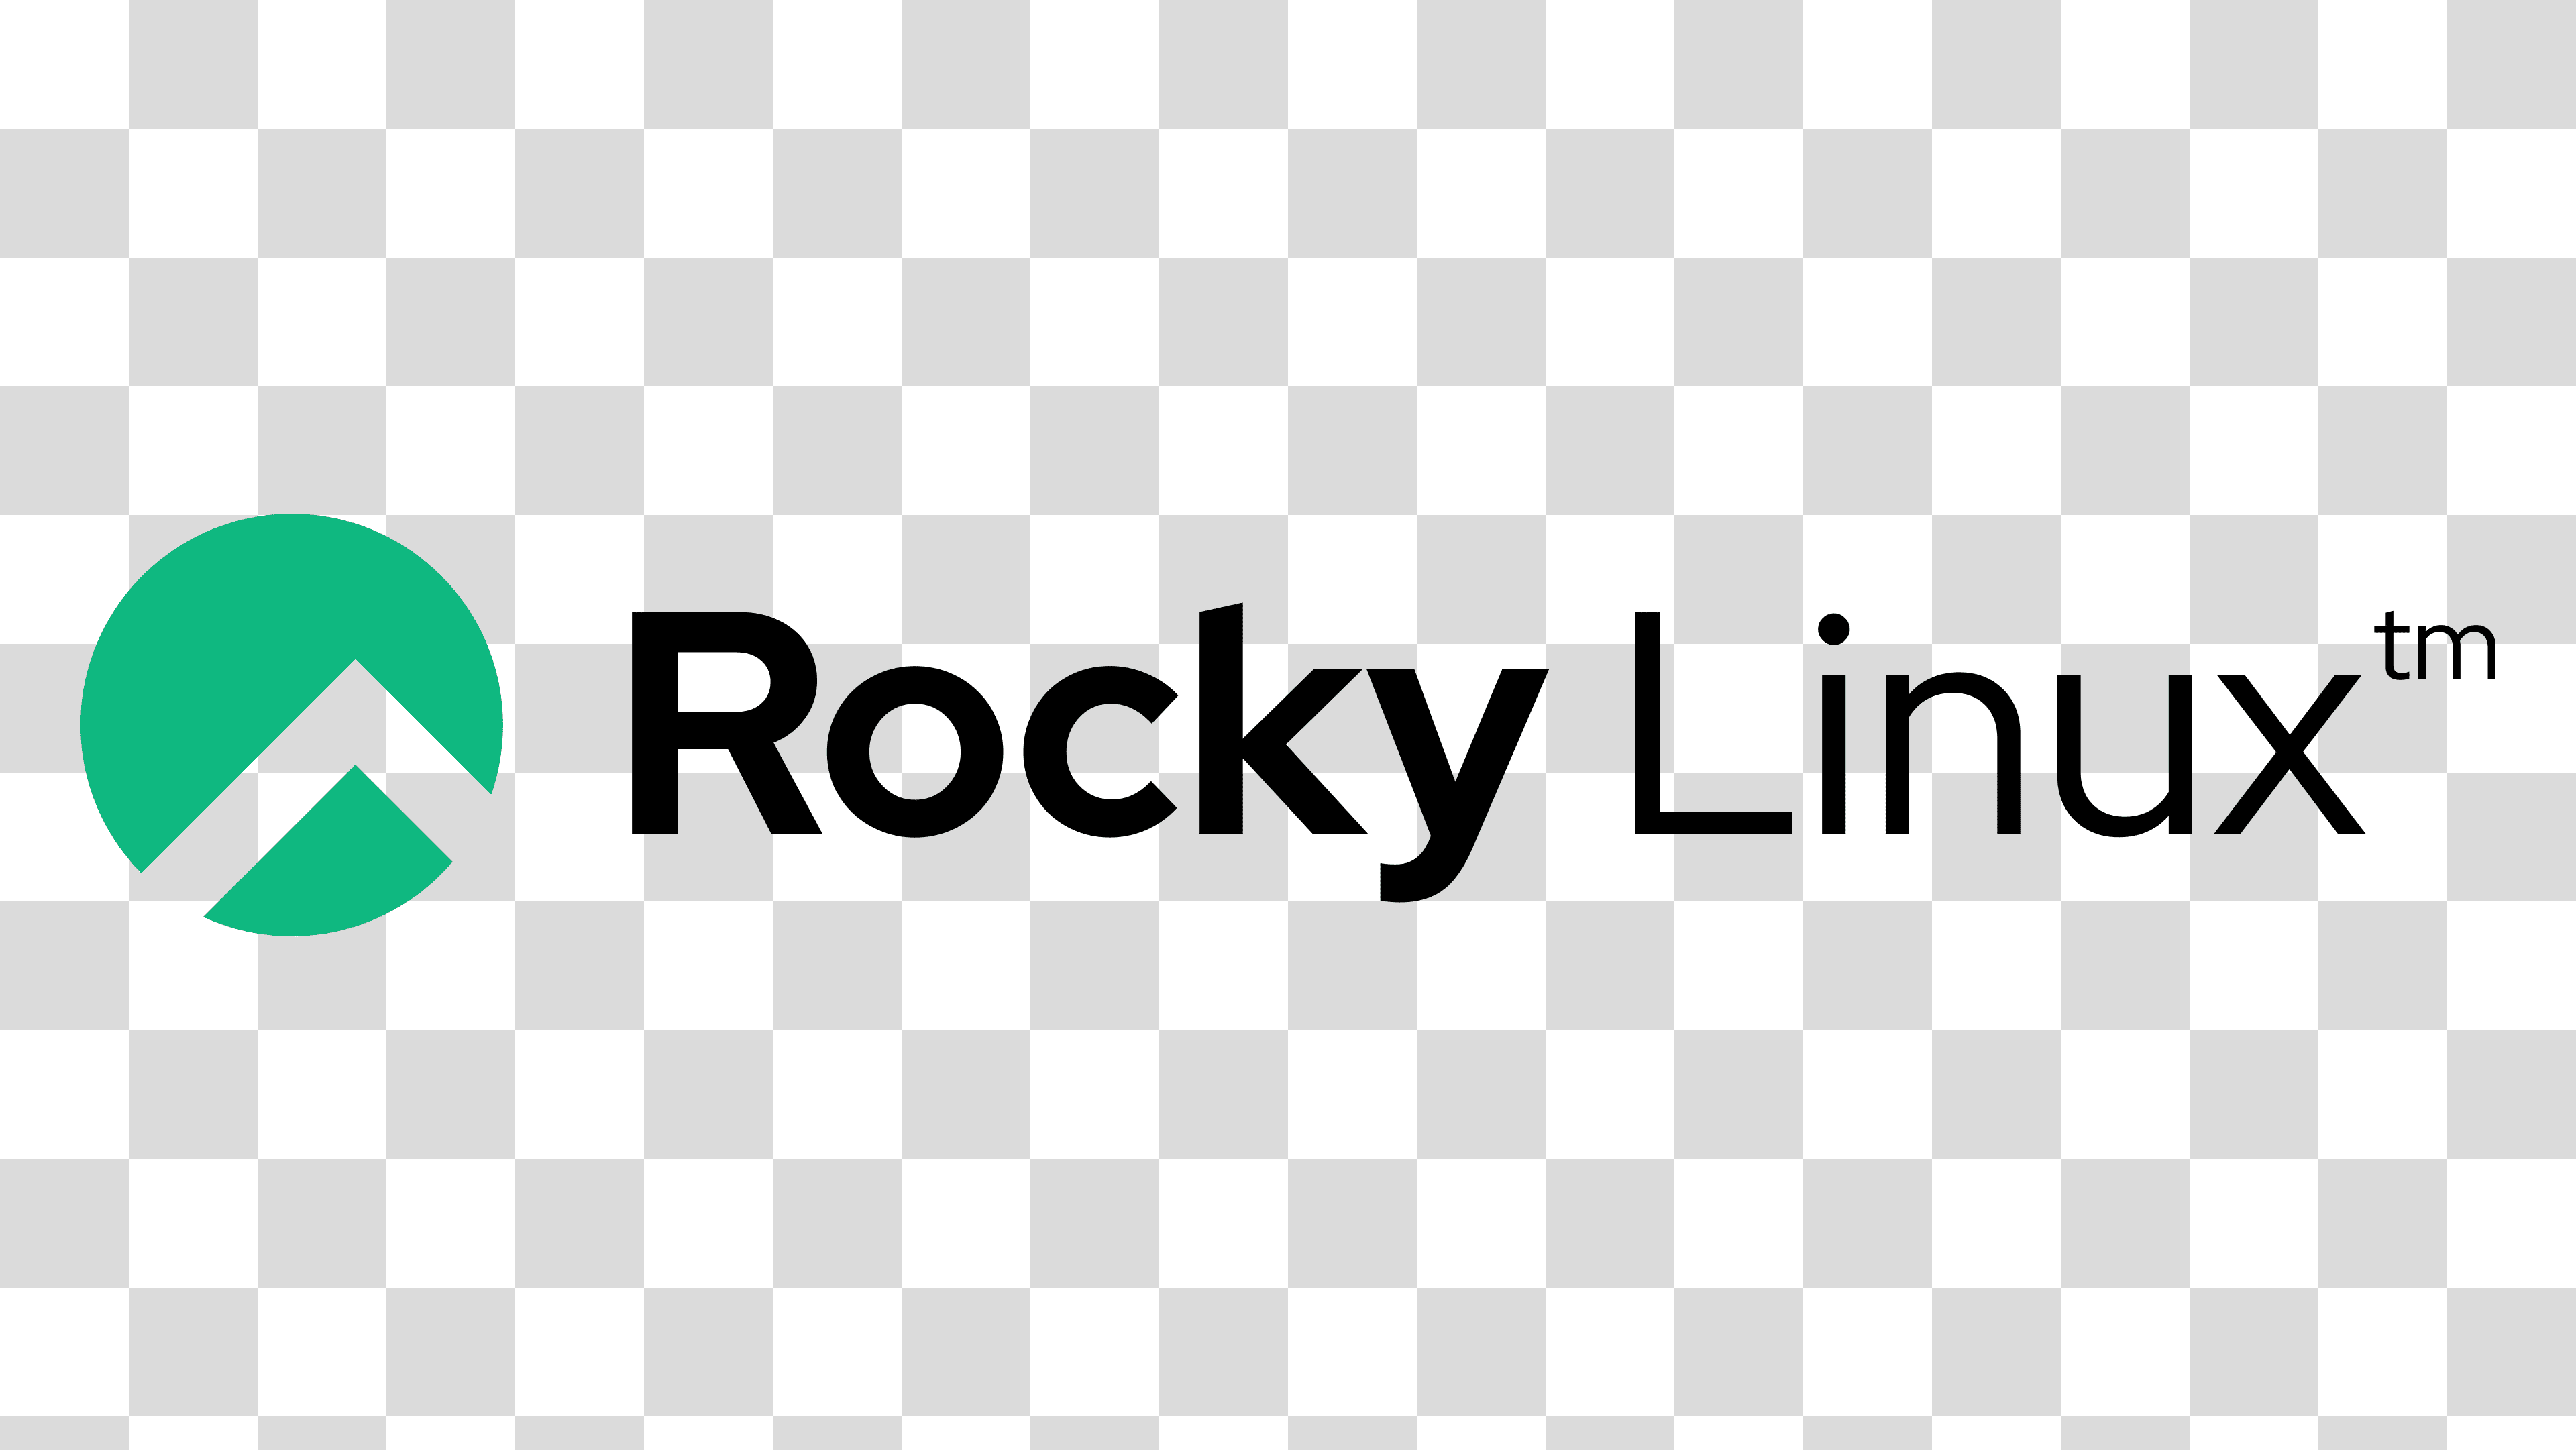 Rocky Linux Logo PNG Transparent Image